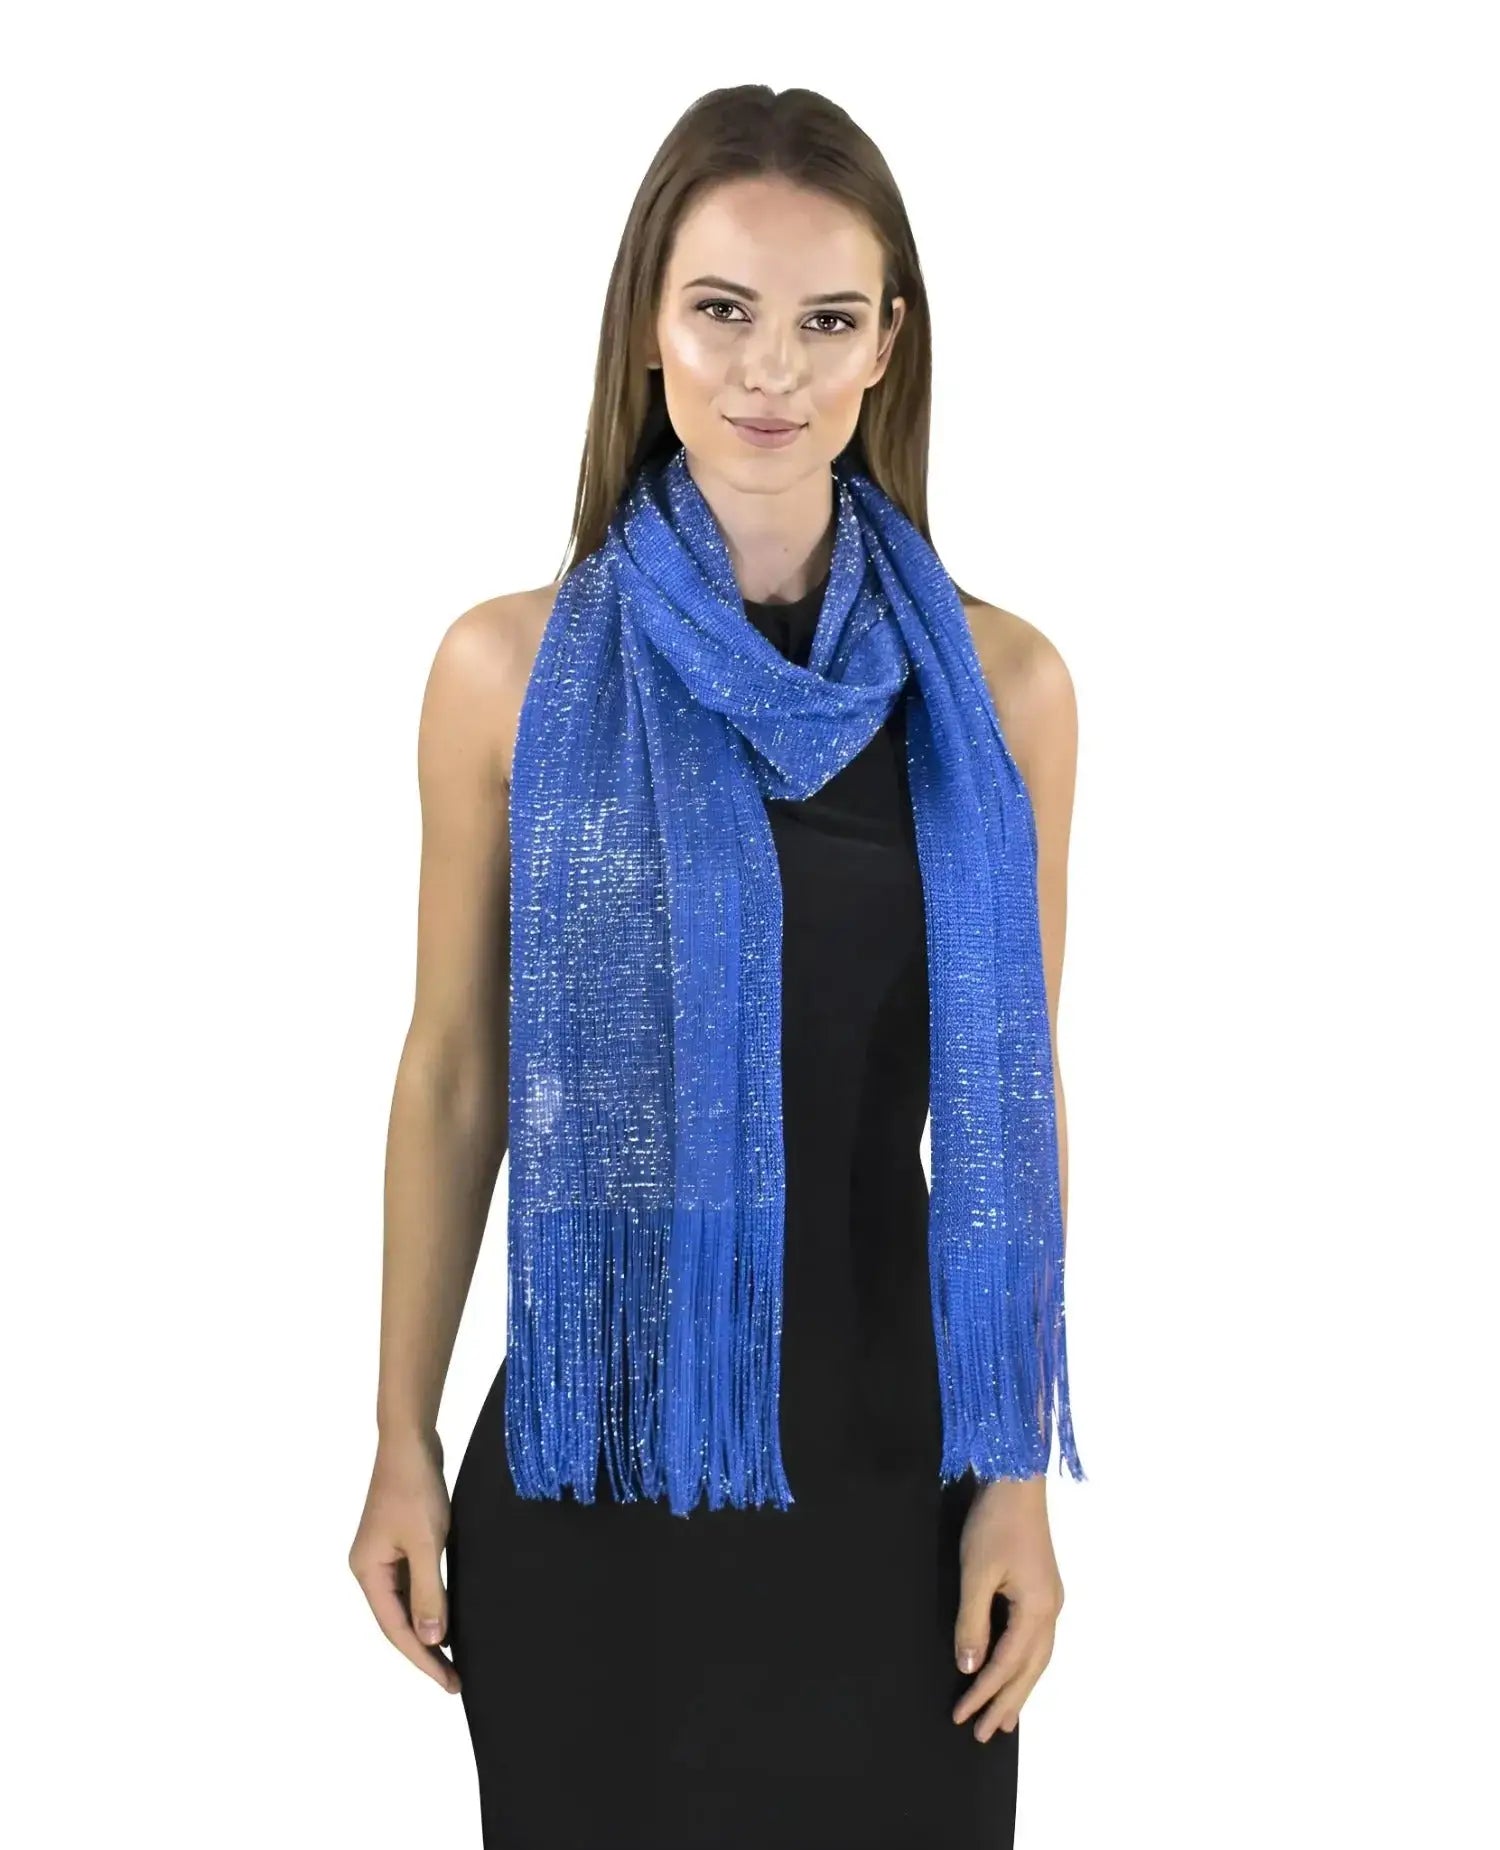 Shimmering lurex fishnet scarf worn by woman